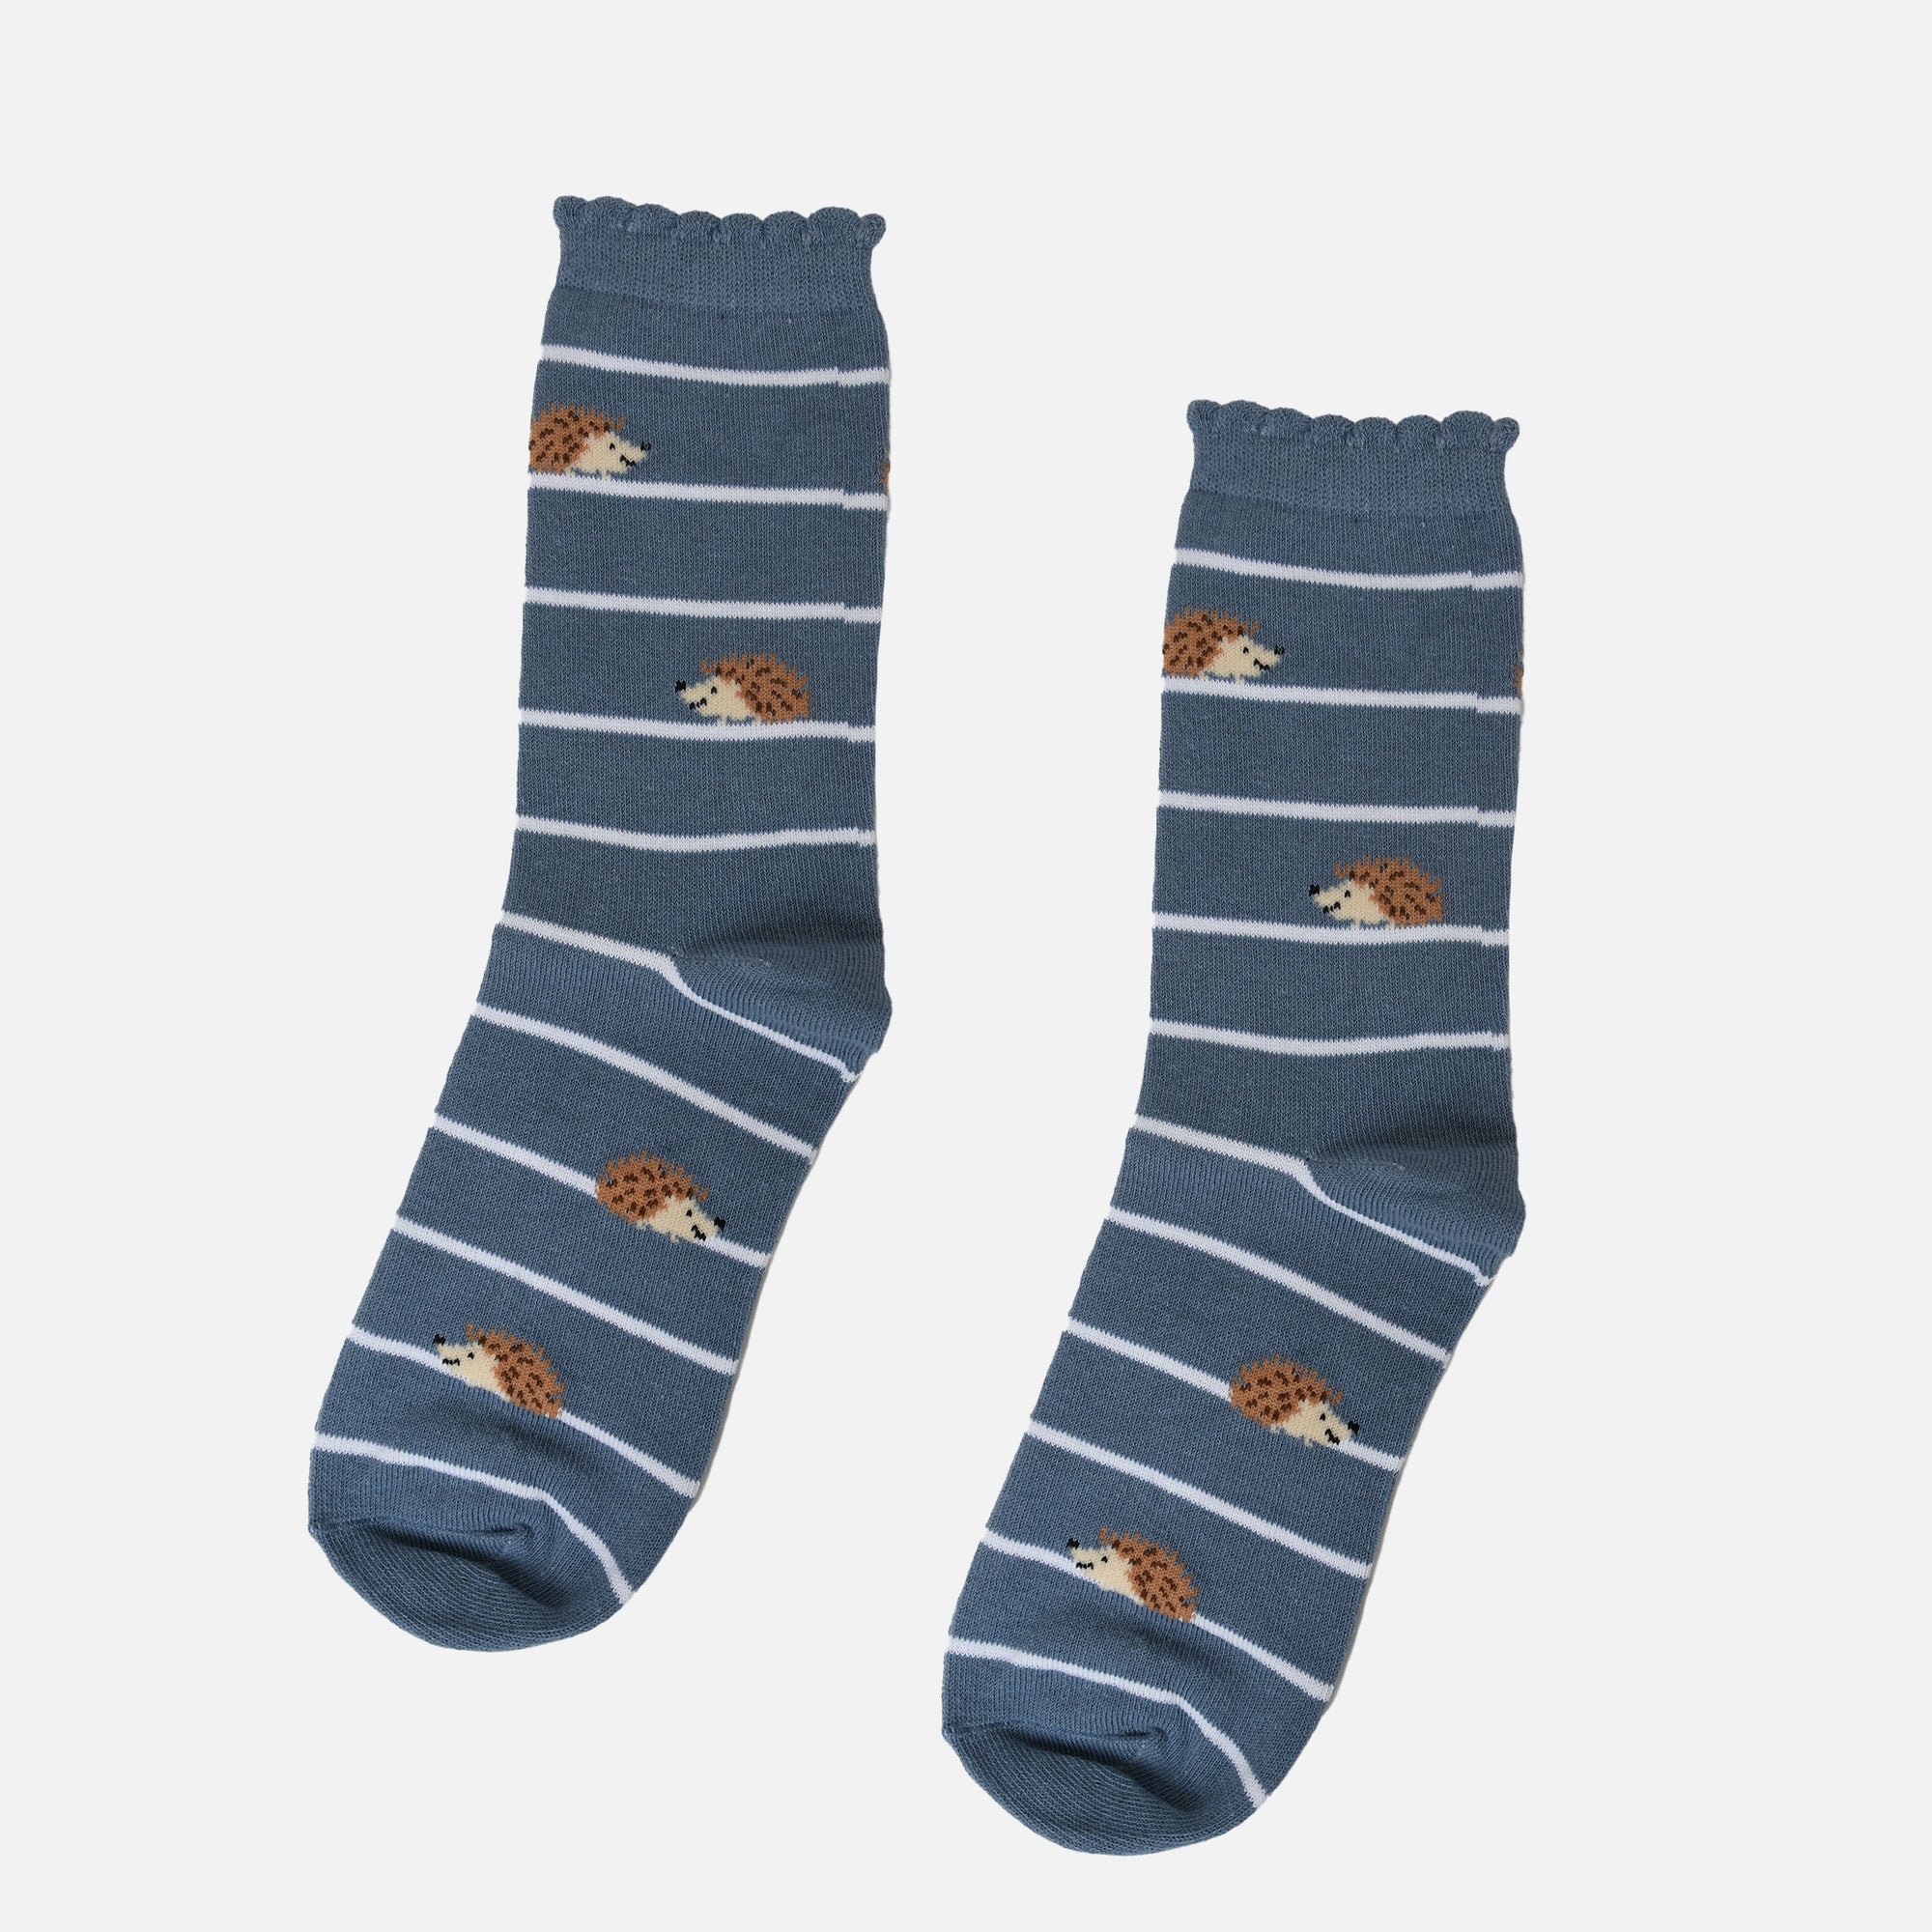 Blue socks with hedgehog on stripes